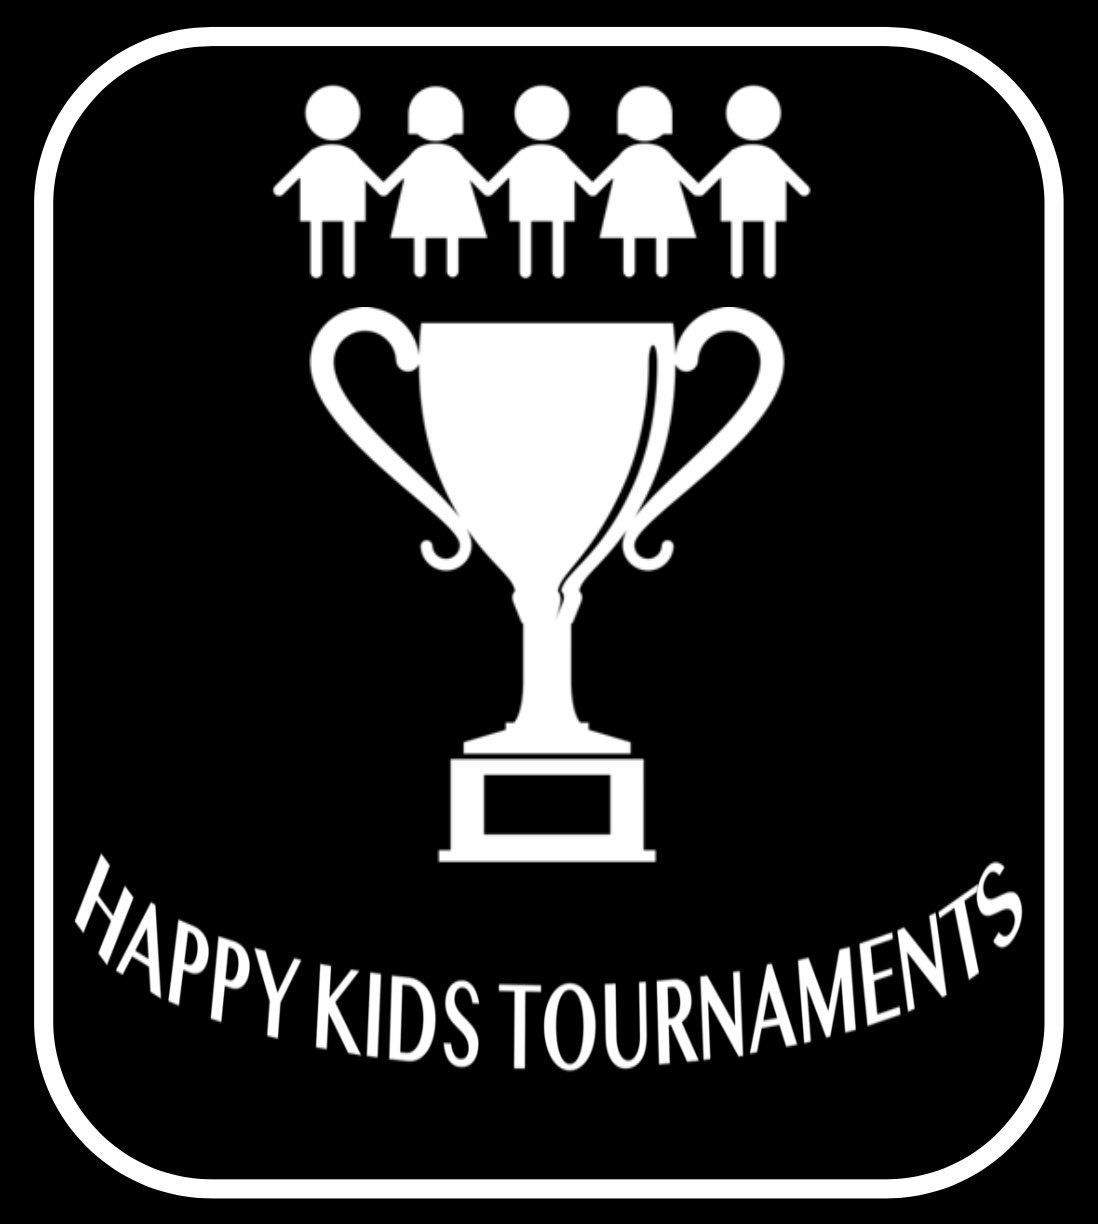 Happy Kids Tournaments